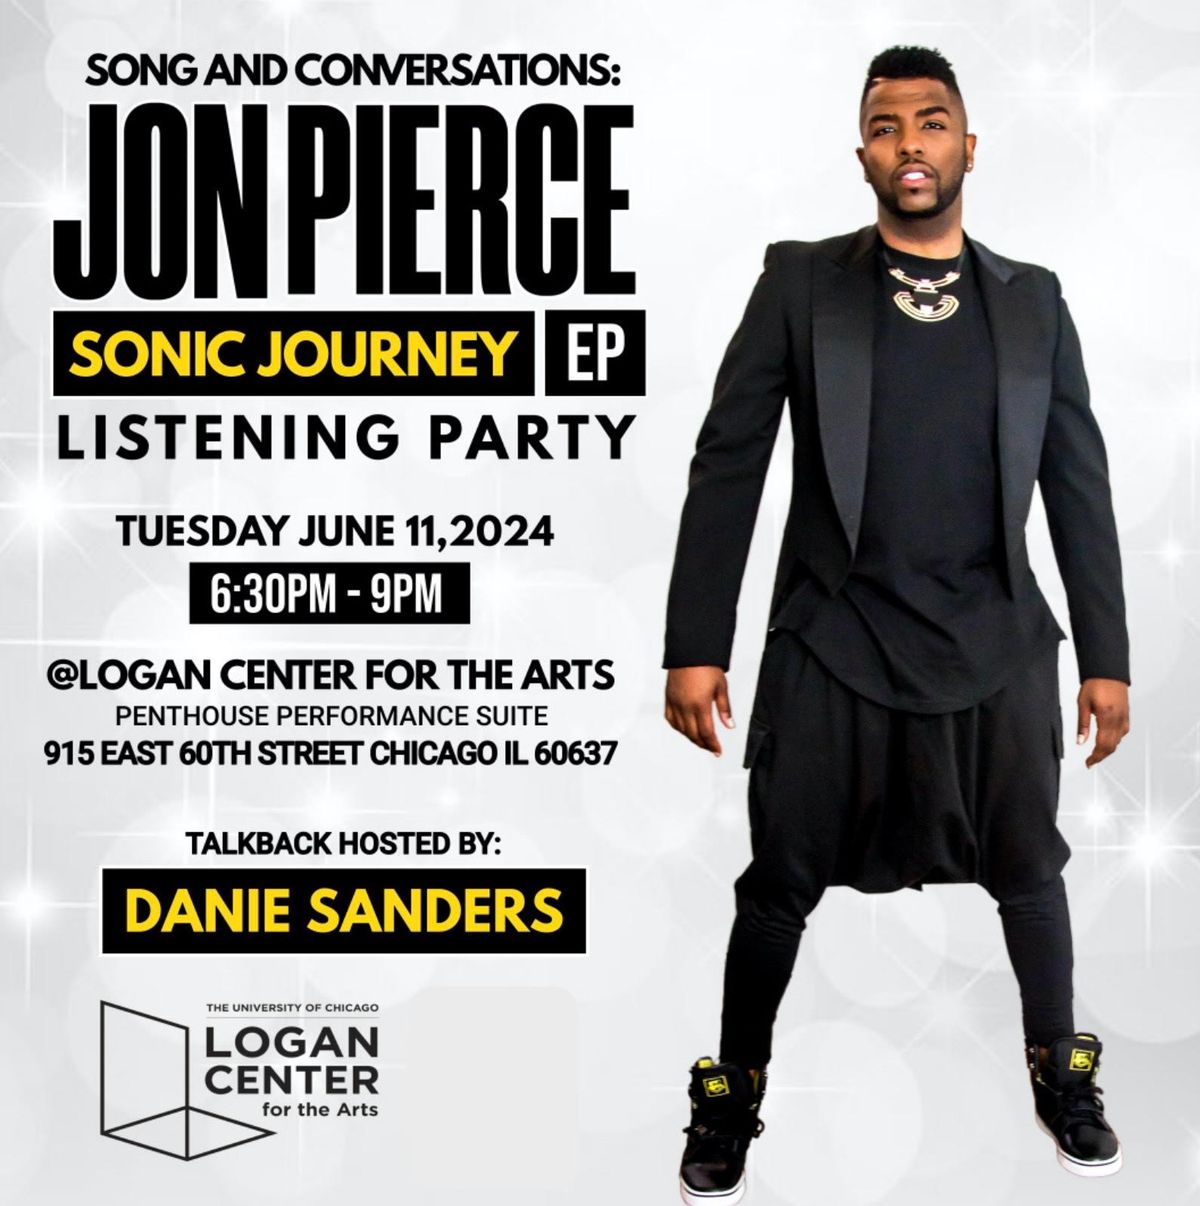 Songs and Conversation: Jon Pierce Sonic Jouney EP Listening Party